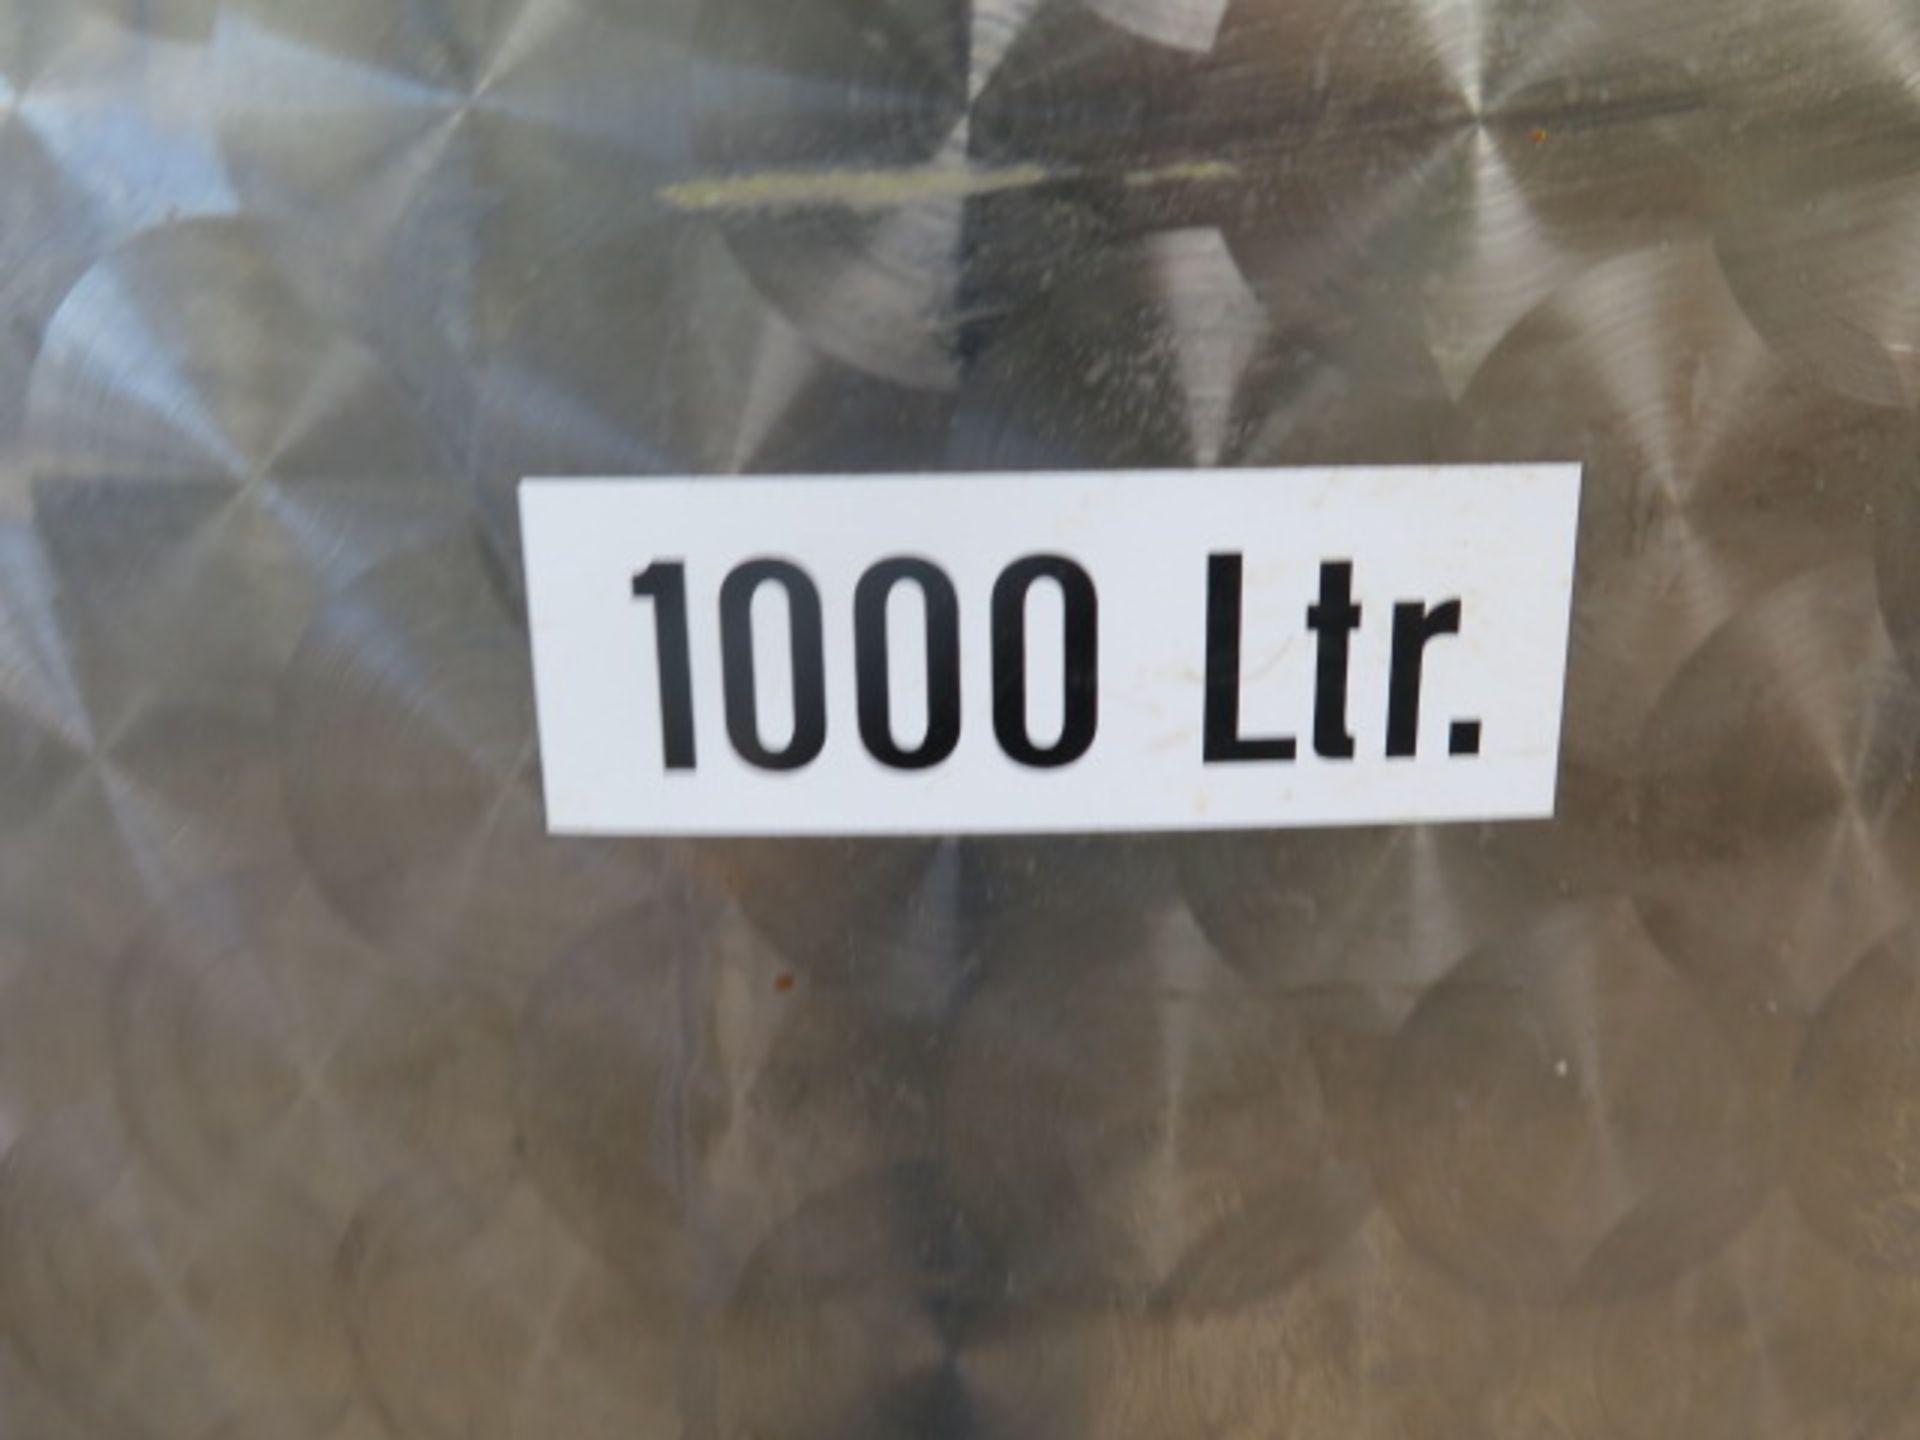 1000 Liter Stainless Steel Rolling Transfer Tank w/ Lid (SOLD AS-IS - NO WARRANTY) - Image 11 of 11